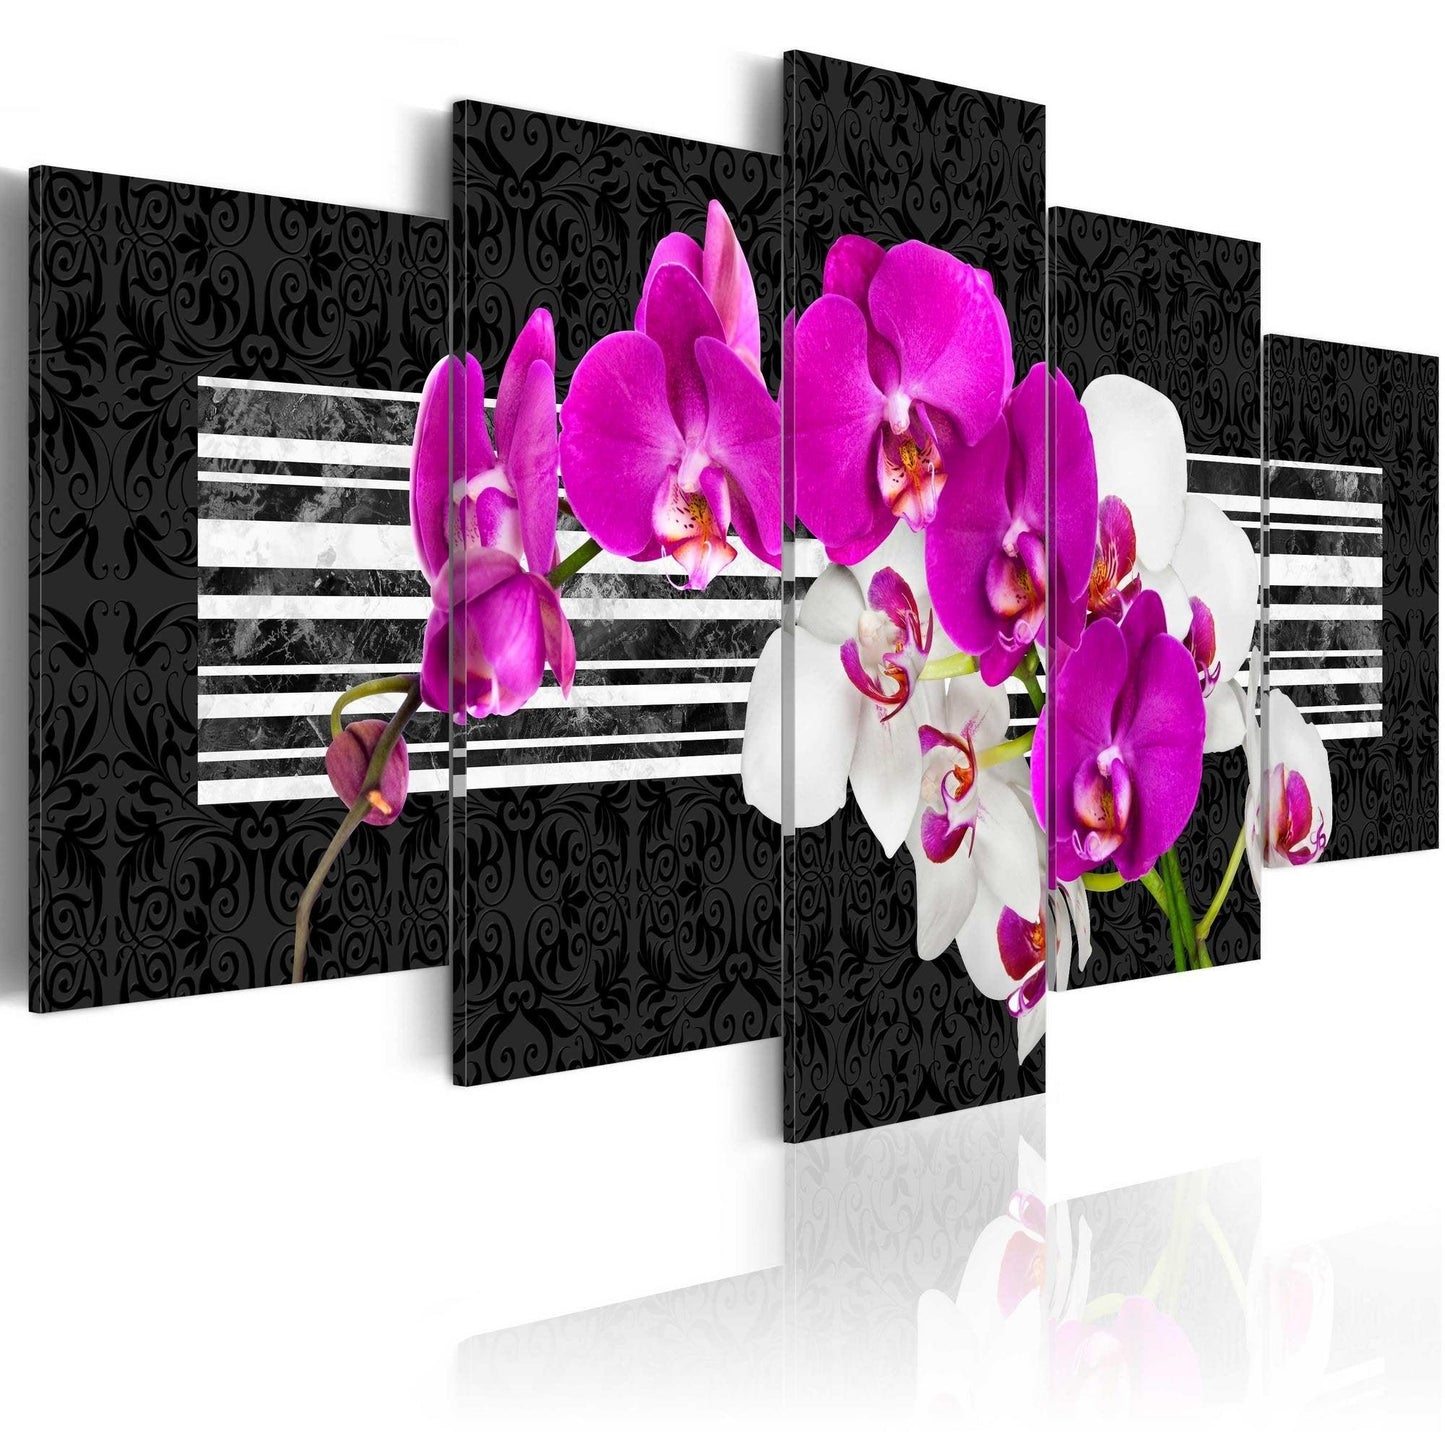 Canvas Print - Modest orchids - www.trendingbestsellers.com